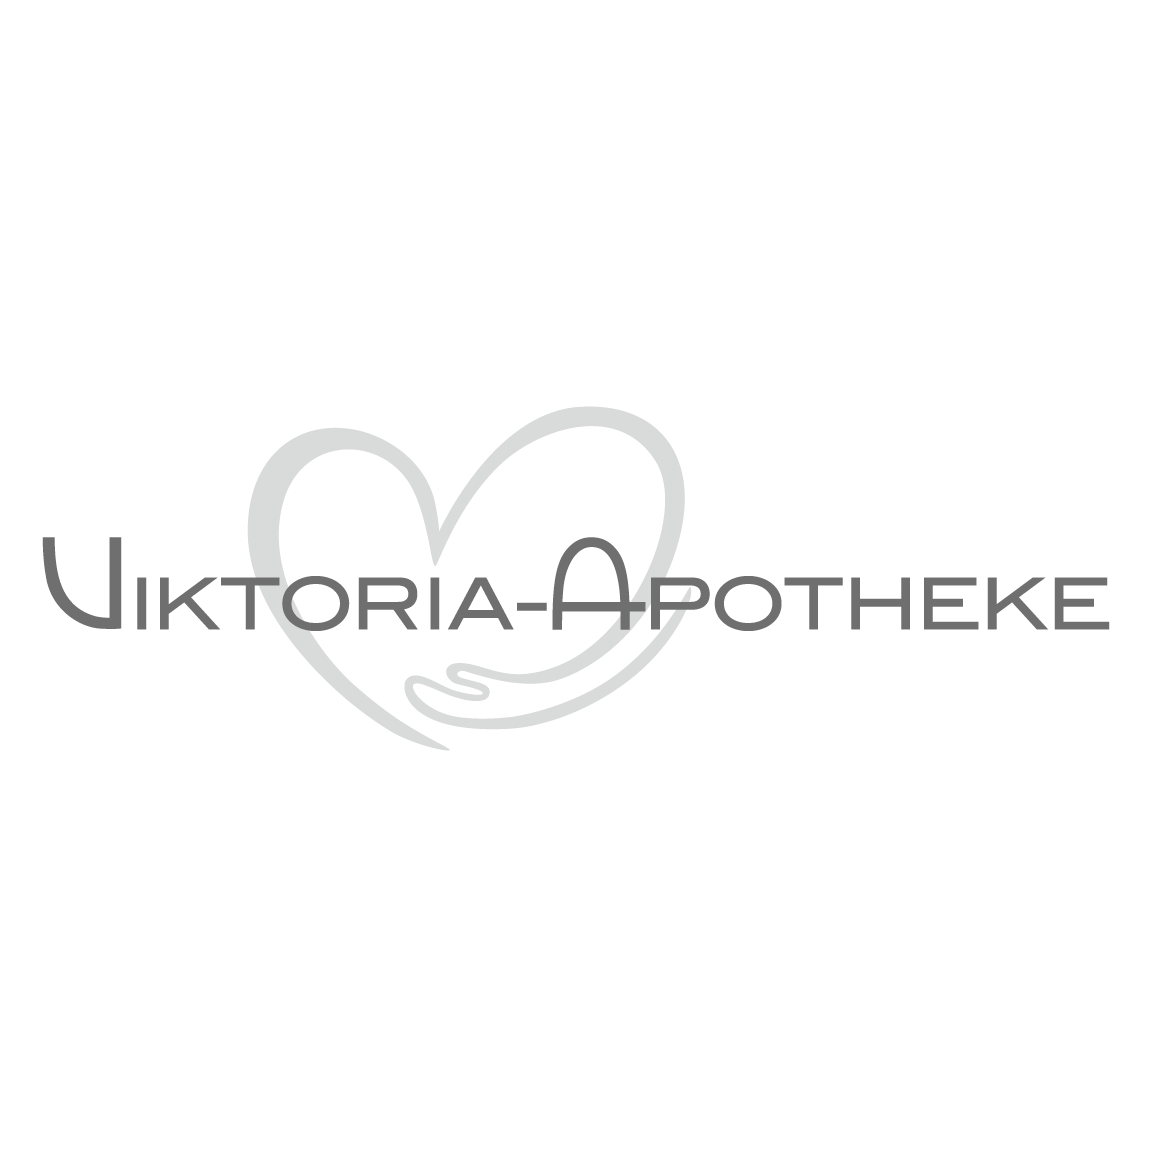 Viktoria-Apotheke in Oldenburg in Oldenburg - Logo